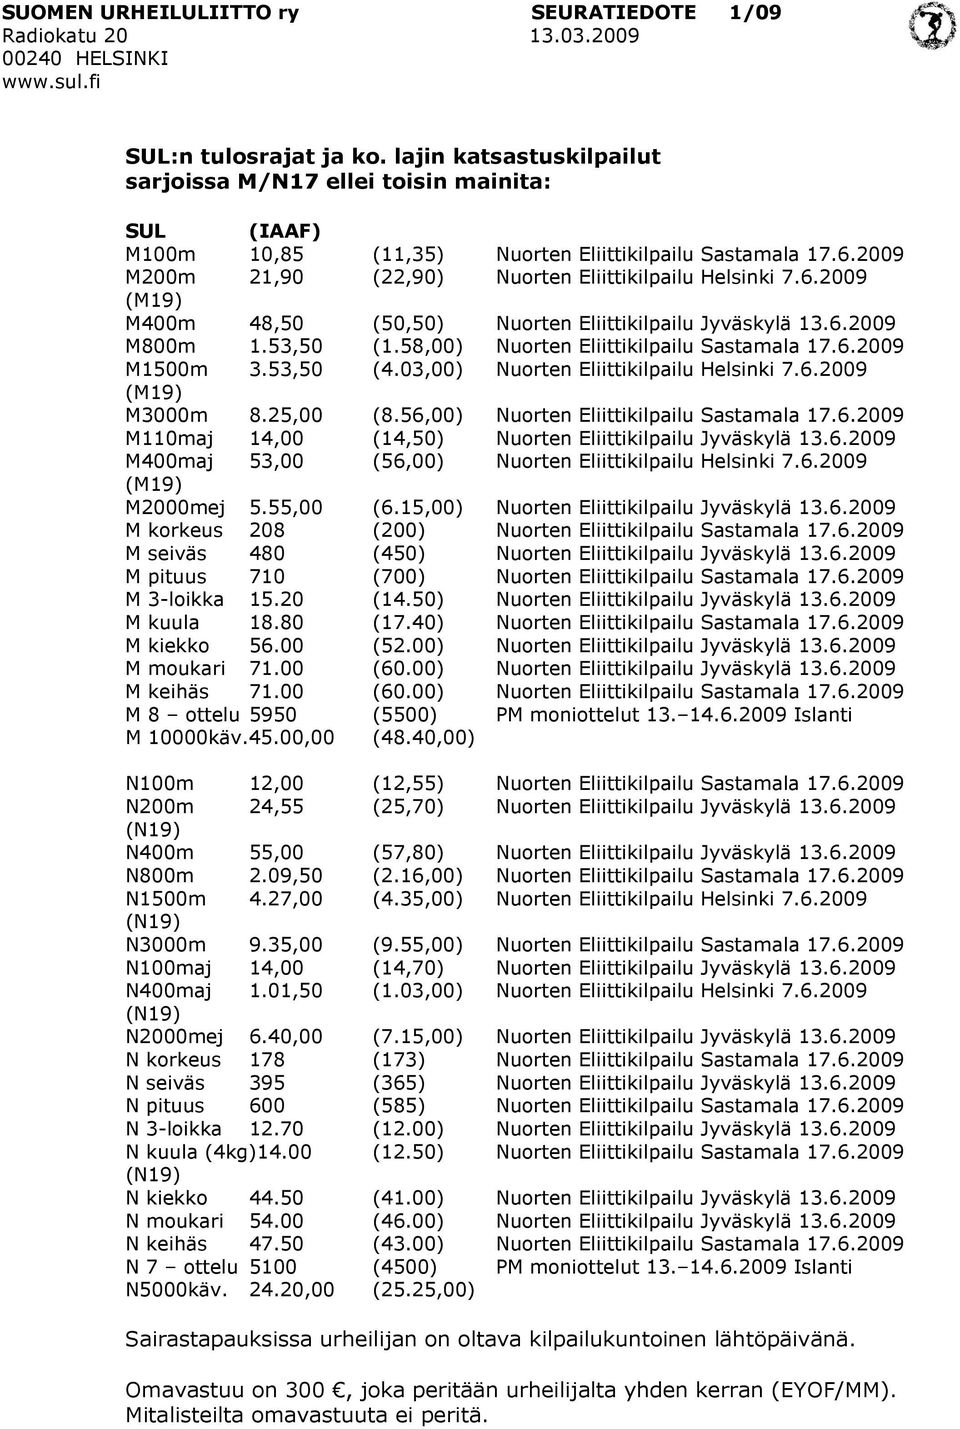 53,50 (4.03,00) Nuorten Eliittikilpailu Helsinki 7.6.2009 (M19) M3000m 8.25,00 (8.56,00) Nuorten Eliittikilpailu Sastamala 17.6.2009 M110maj 14,00 (14,50) Nuorten Eliittikilpailu Jyväskylä 13.6.2009 M400maj 53,00 (56,00) Nuorten Eliittikilpailu Helsinki 7.